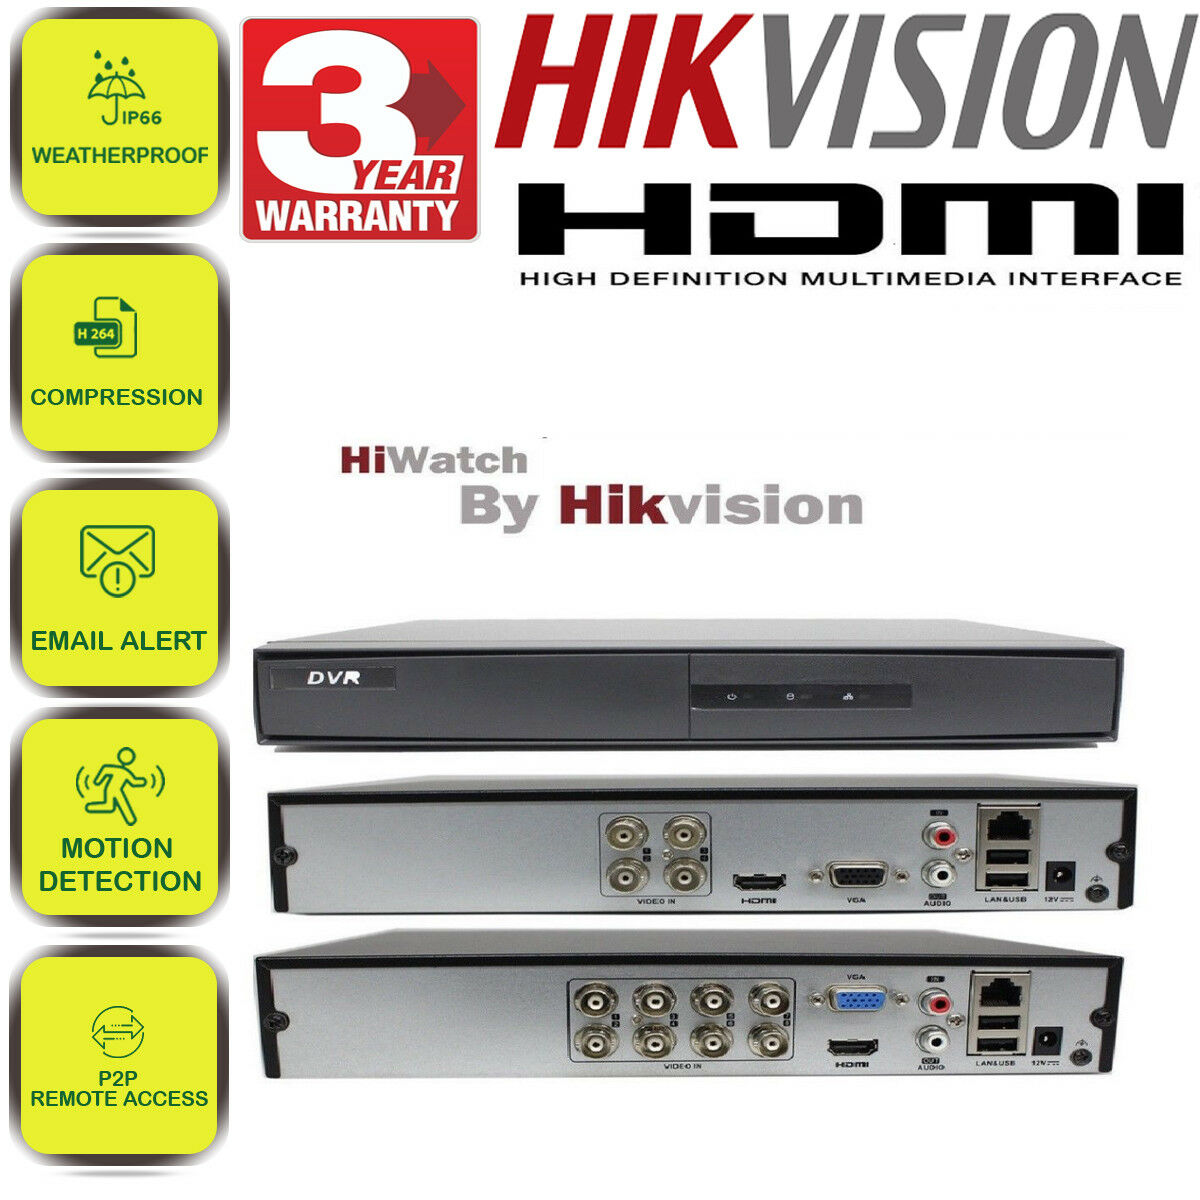 HIKVISION HILOOK DVR 8CH TURBO CCTV 1080P FULL HD CHANNEL AHD TVI CVI